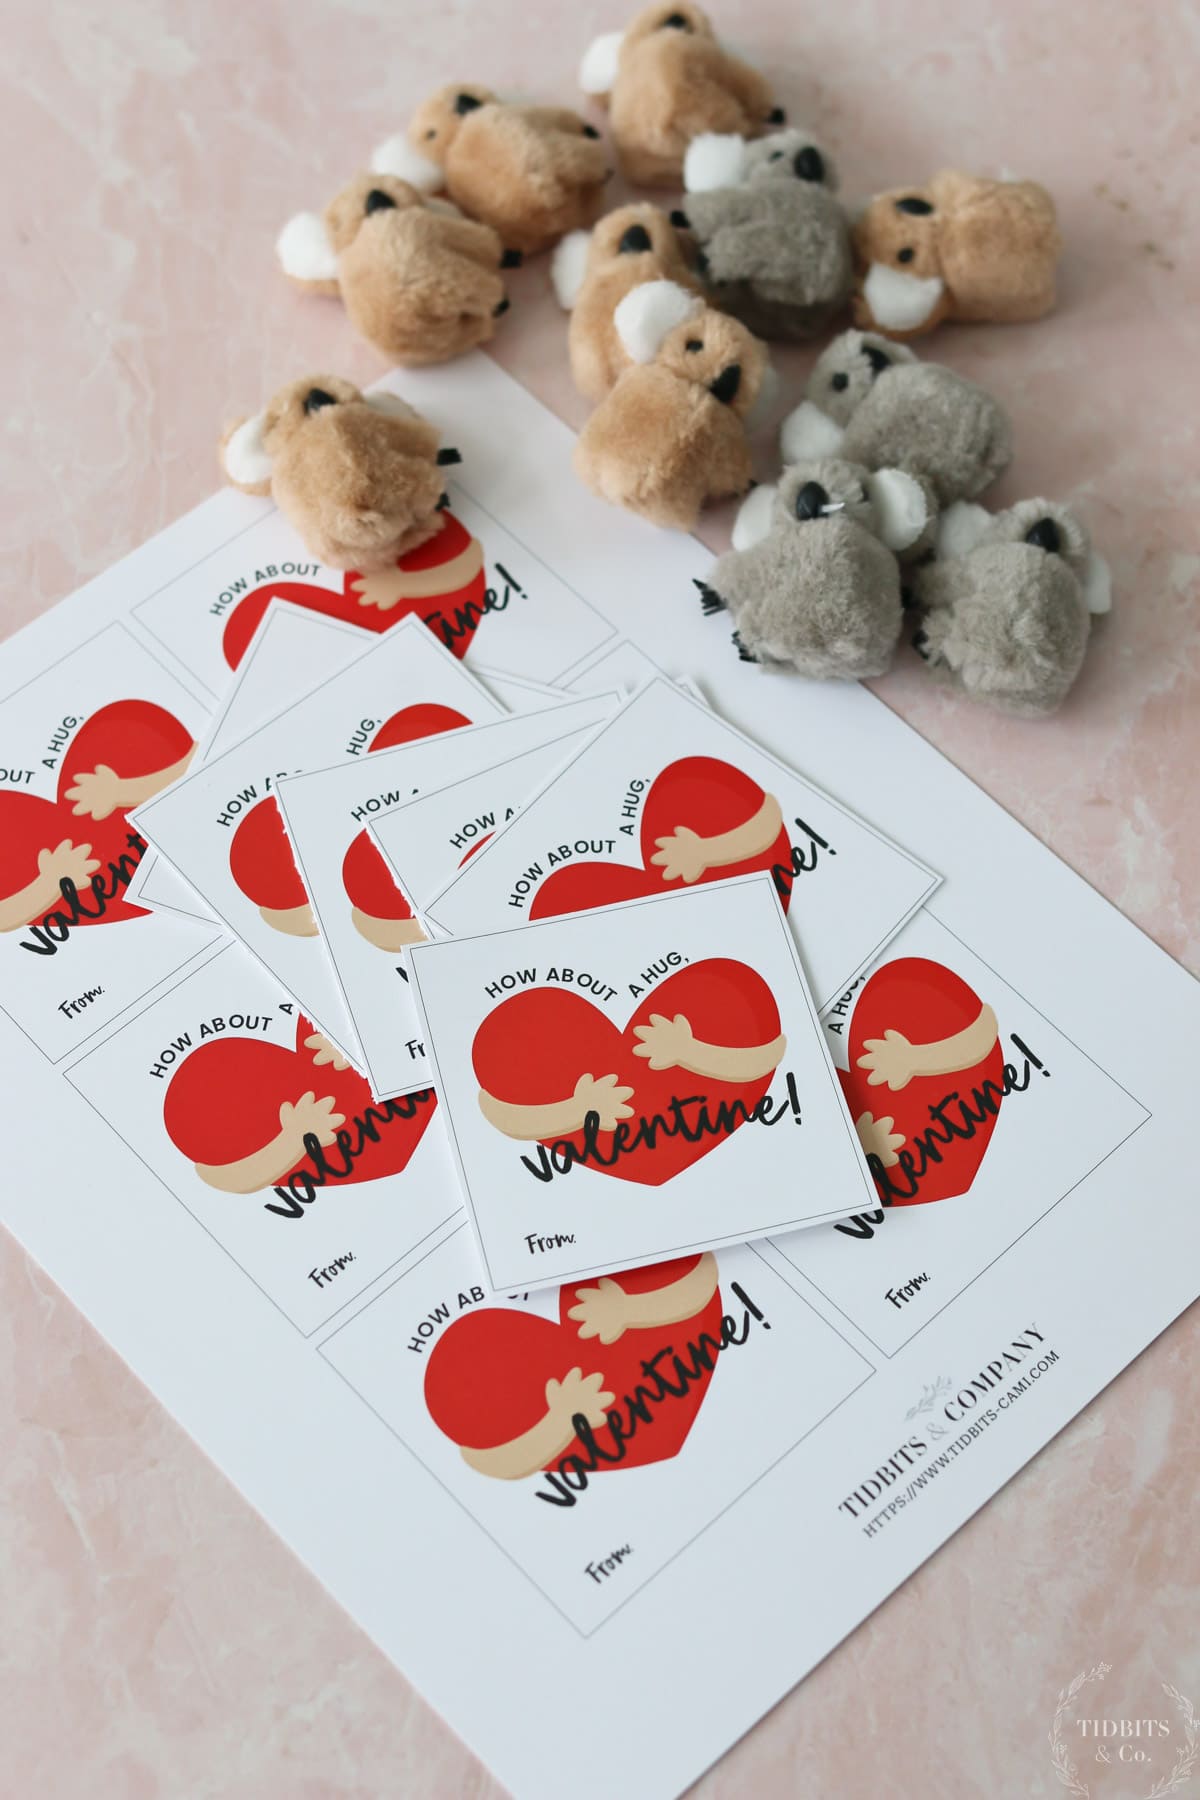 Printable valentine cards and koala bear clips for "hugging" valentine